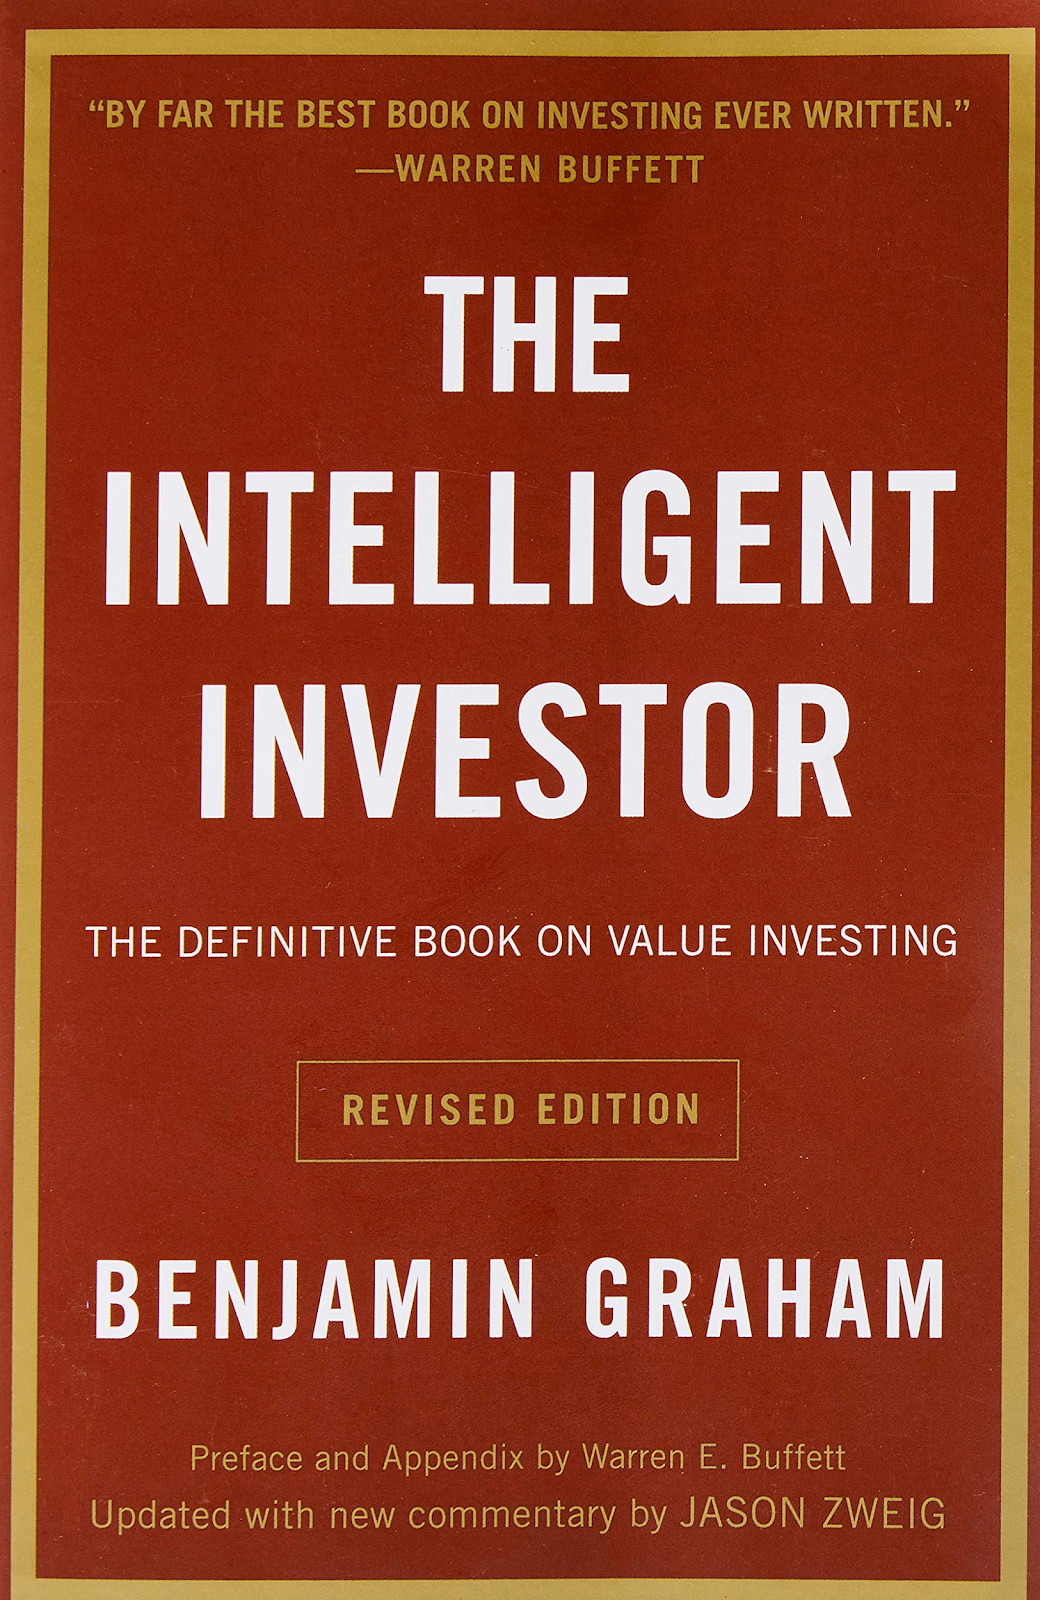 Warren Buffett Recommended Books - The Intelligent Investor